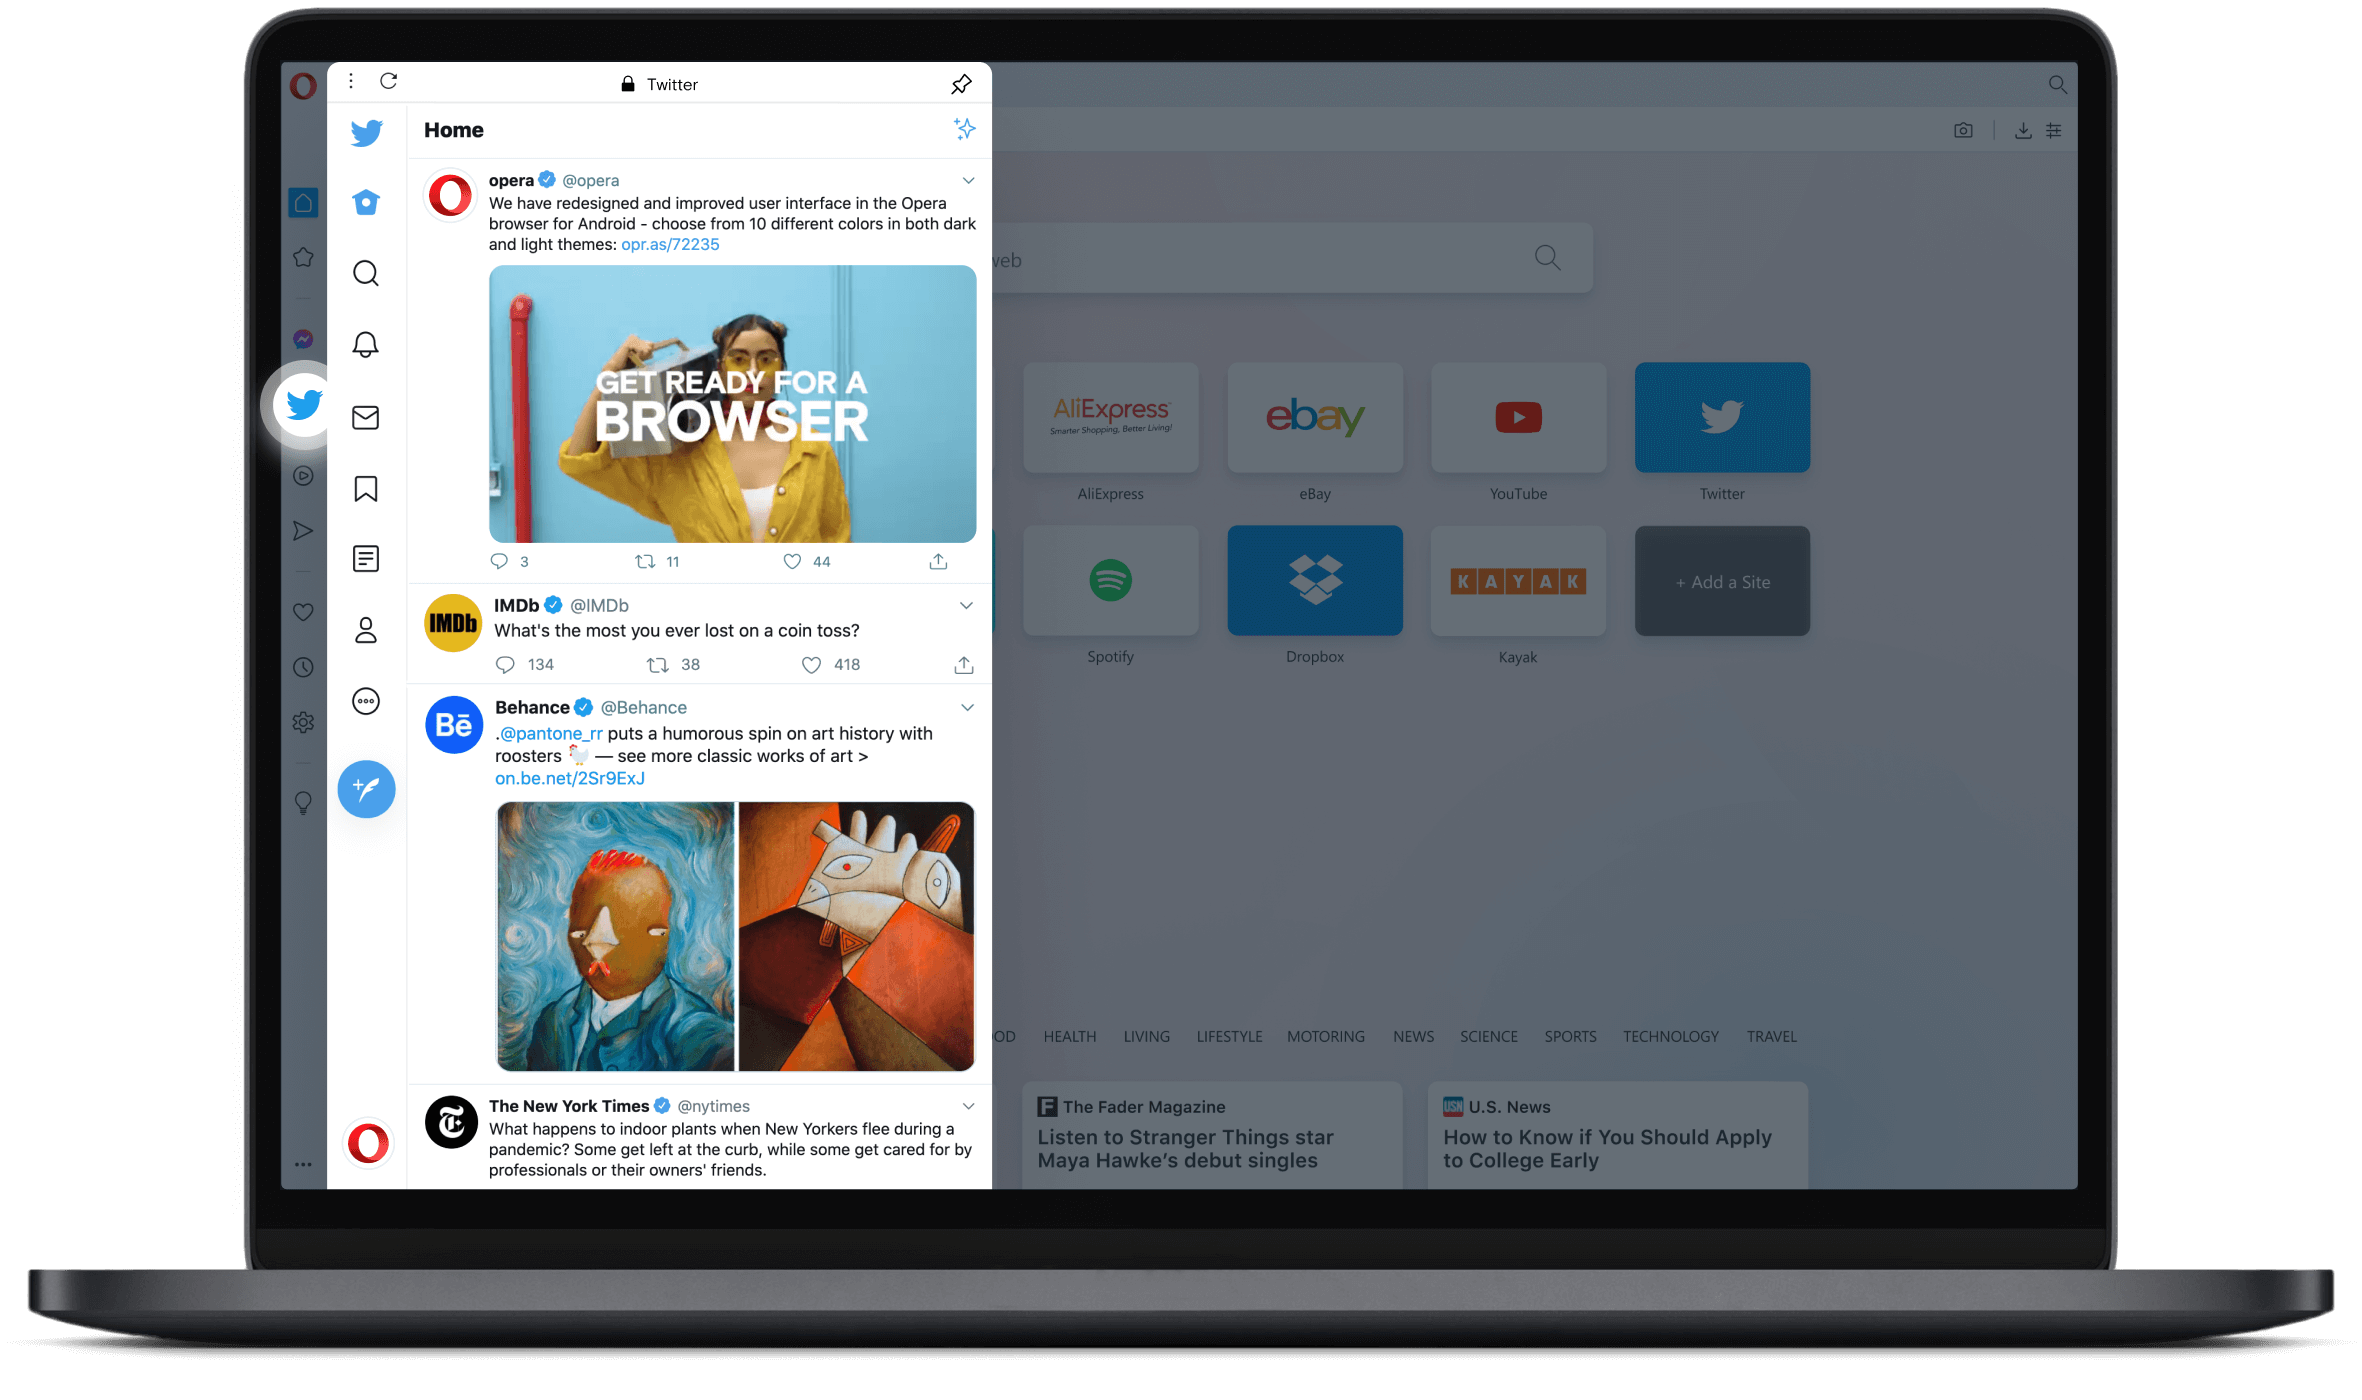 twitter in opera | tweet, explore, and get a better view on desktop | opera